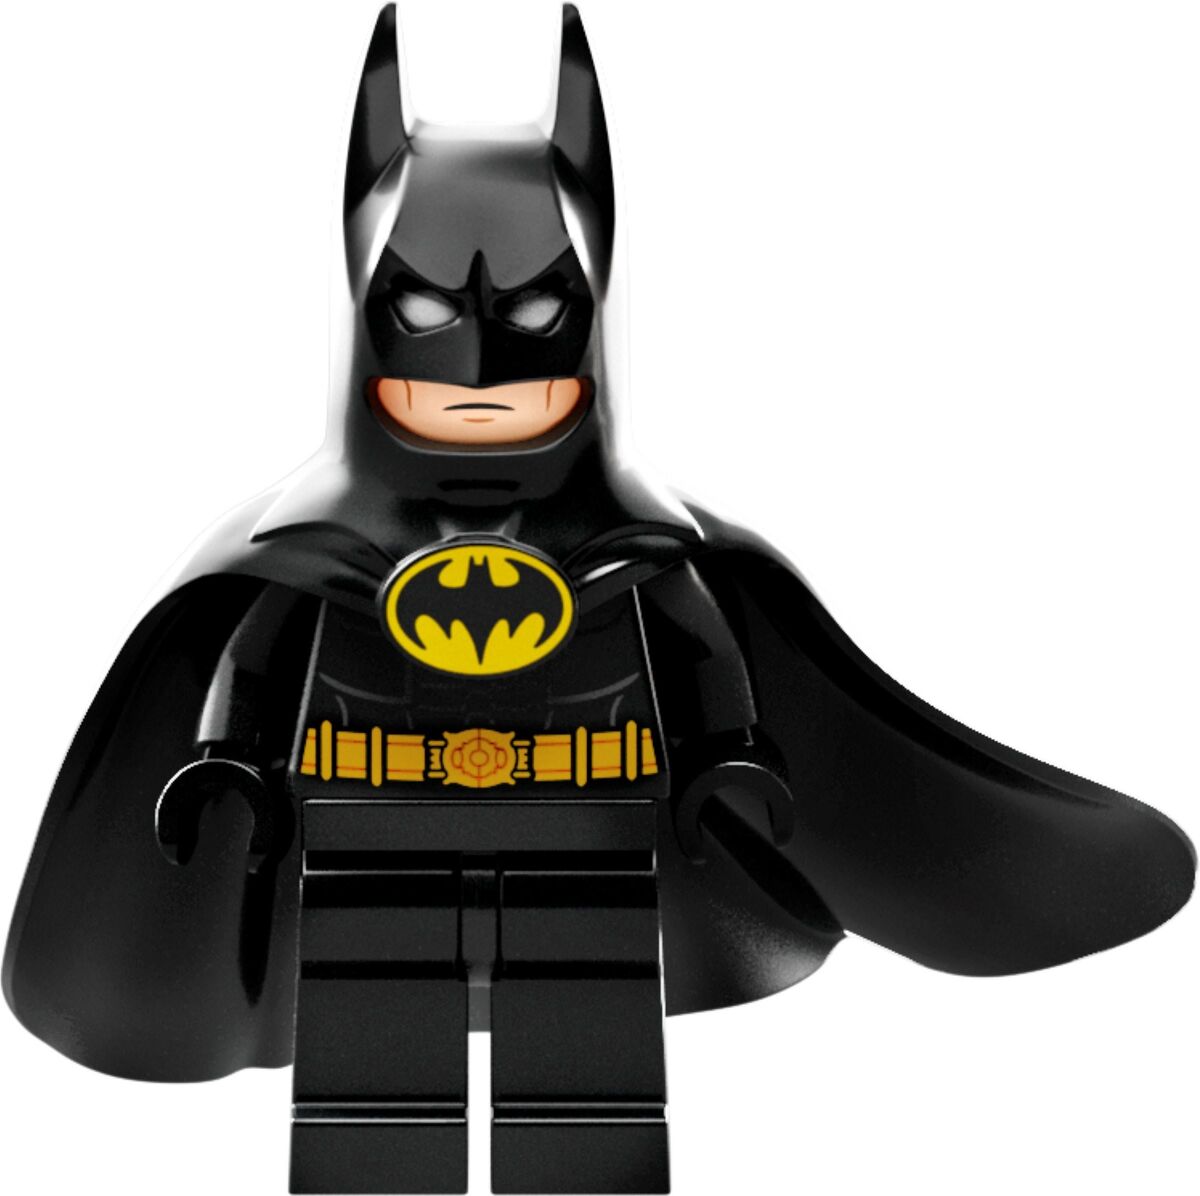 LEGO 1989 BATMAN MINIFIGURE 76139 & BATARANG - DC SUPERHEROES - NEW GENUINE